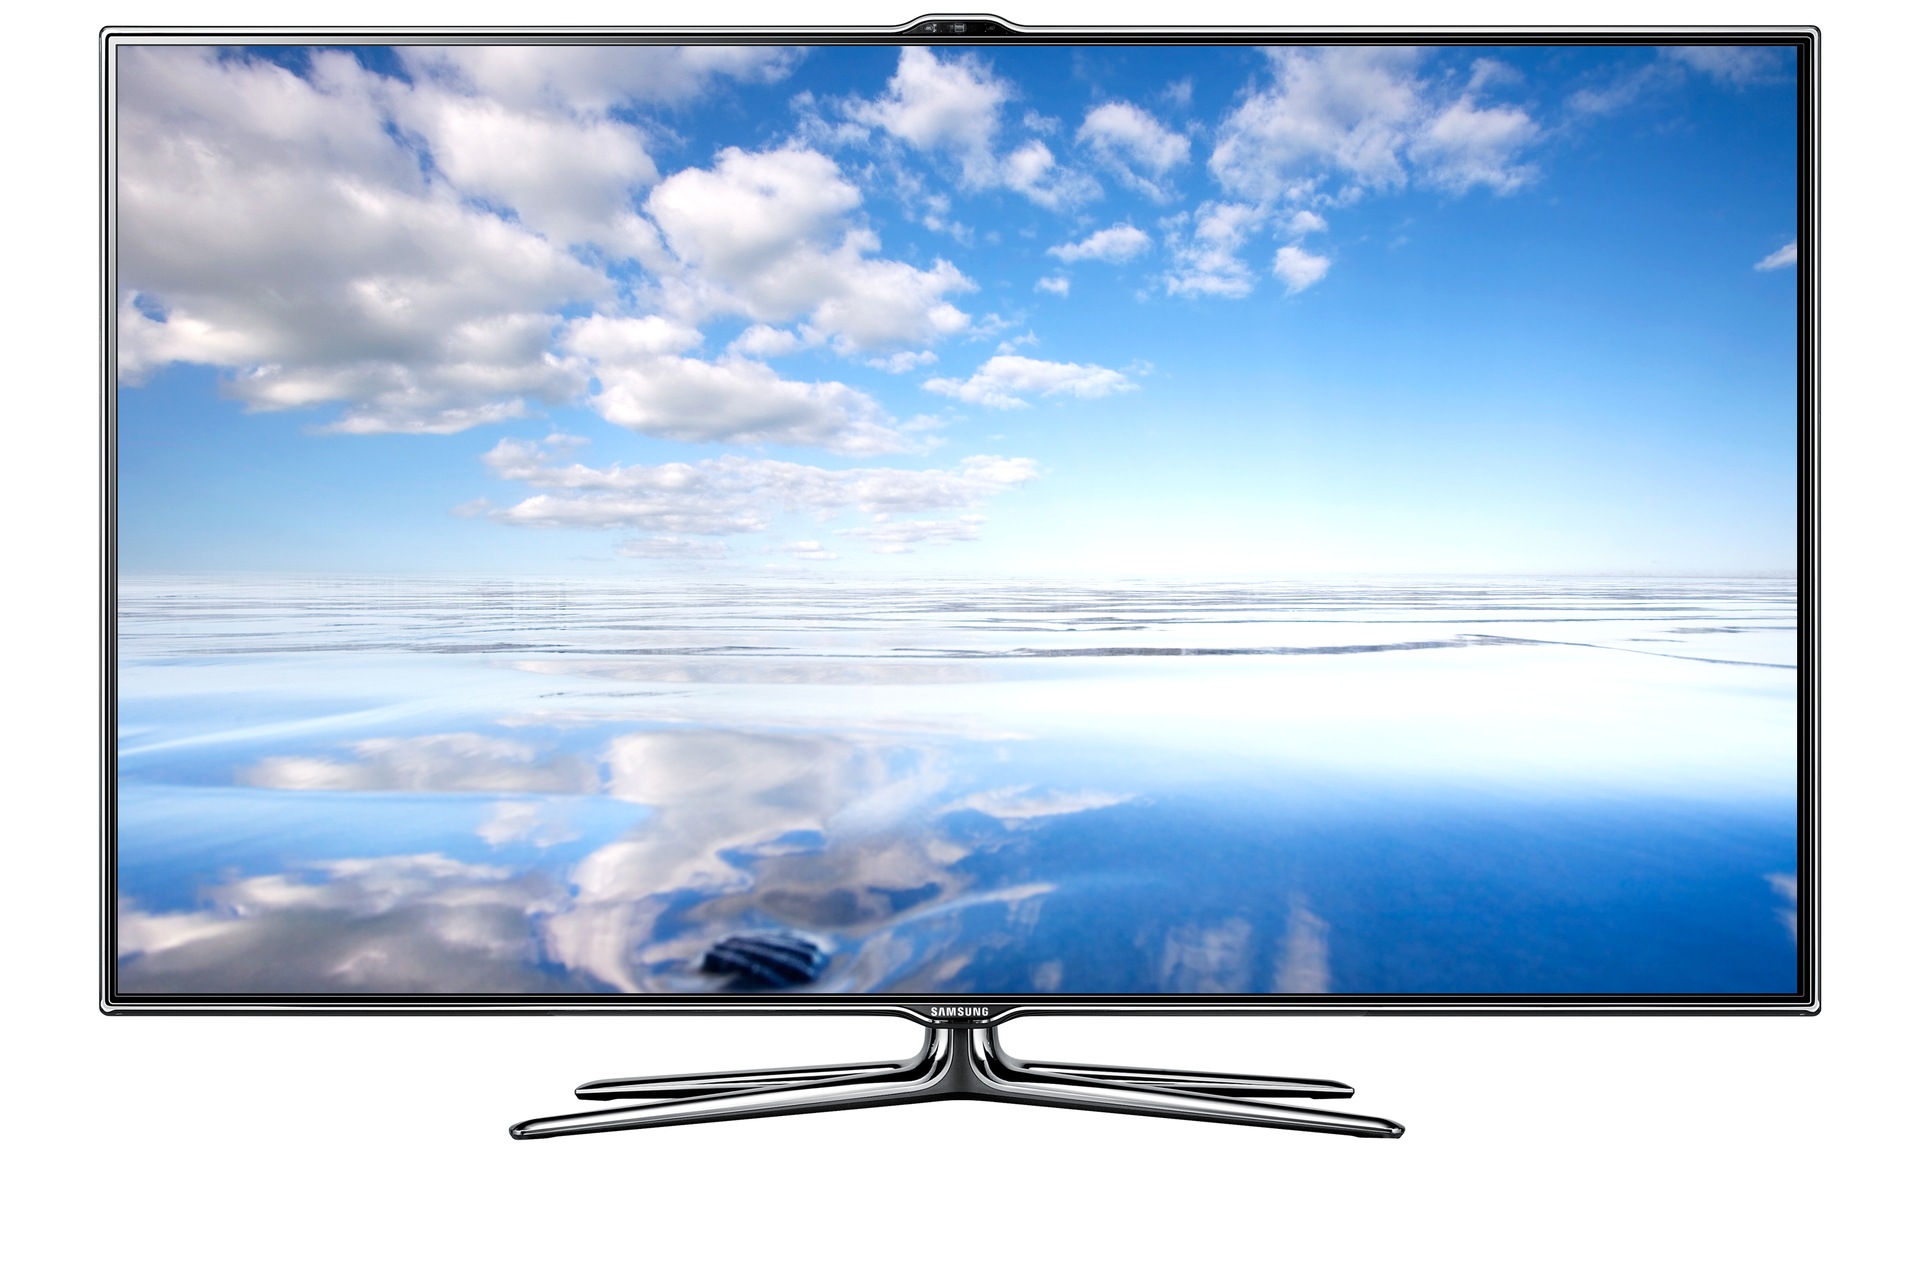 [2012] UA40ES7500R Smart 40-Inch Full HD LED TV | Samsung